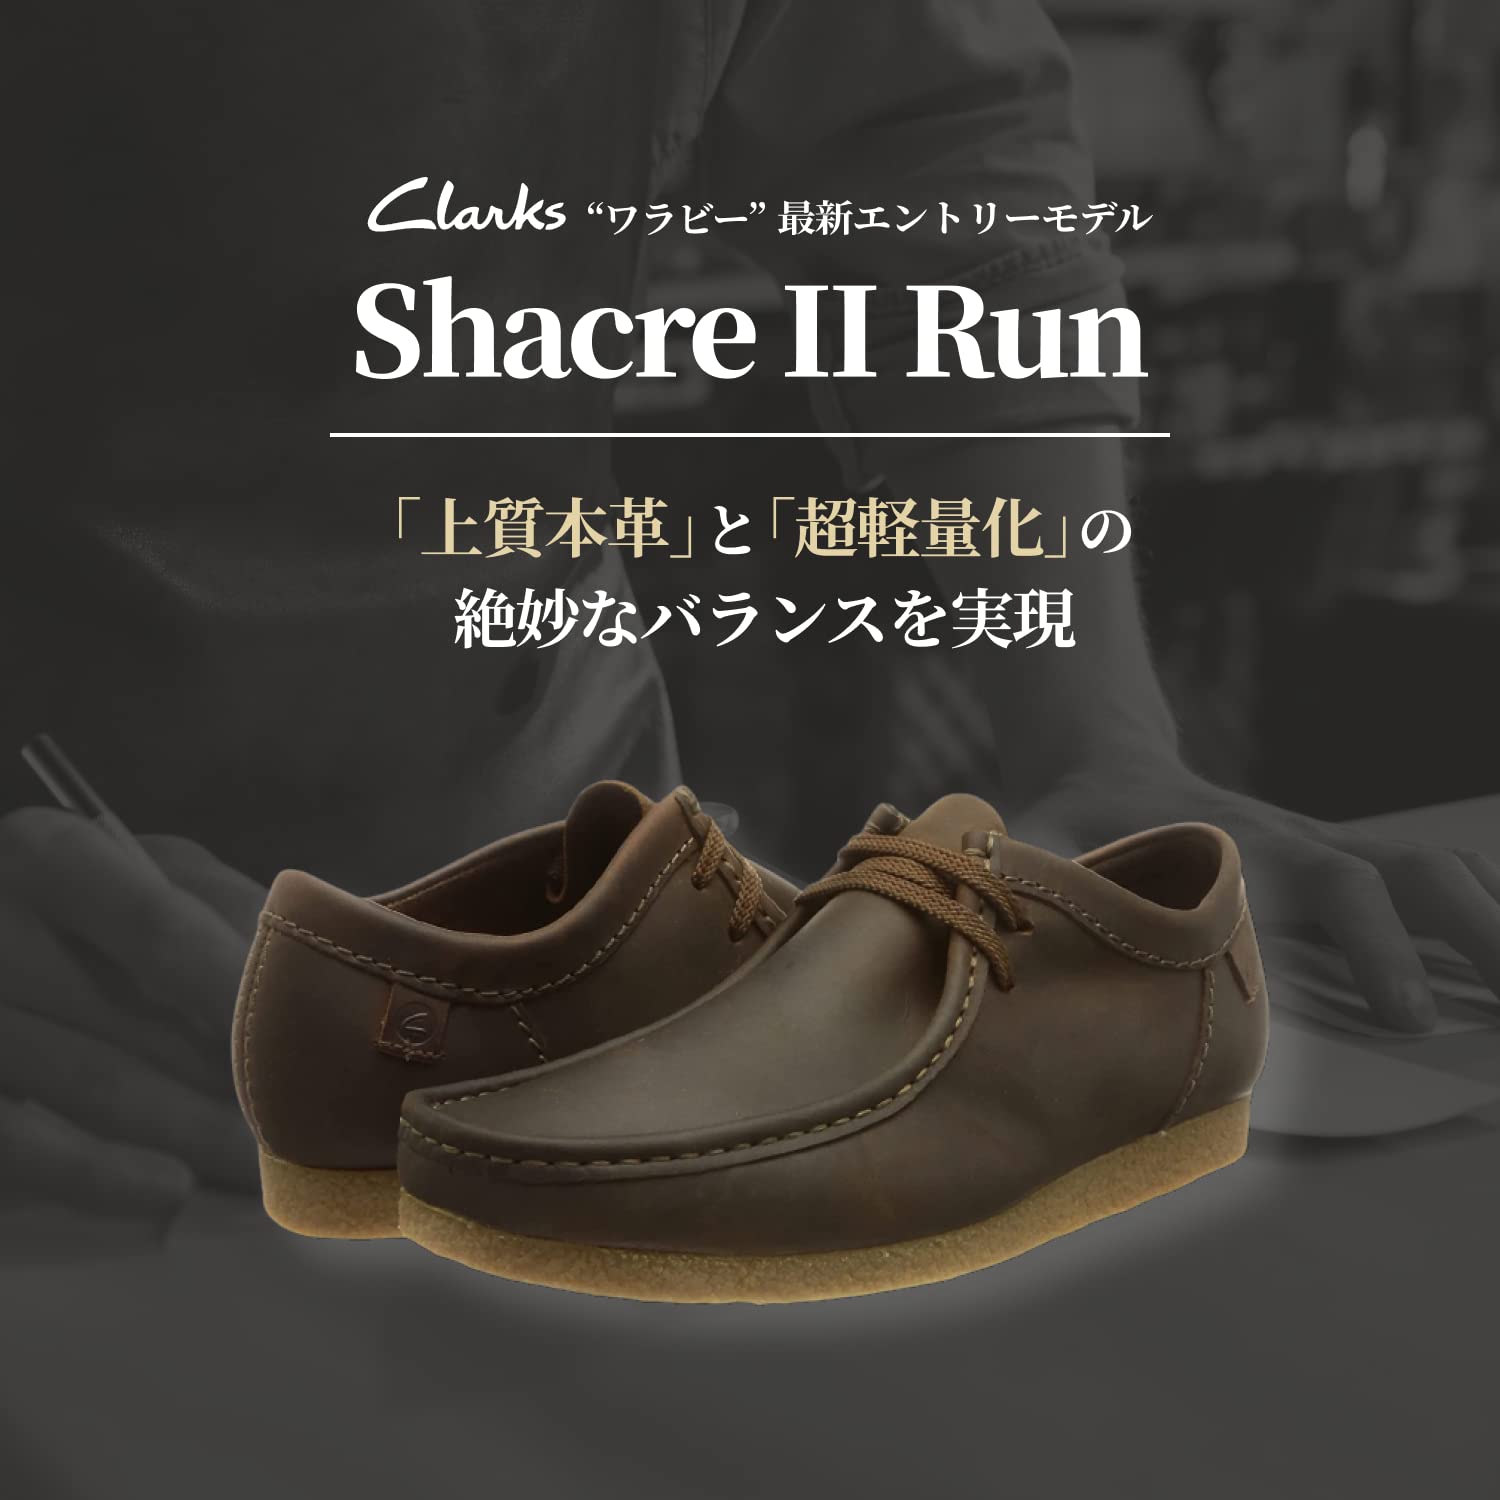 Clarks Shacre II Run Tan Tumbled (26159431) UK-11 